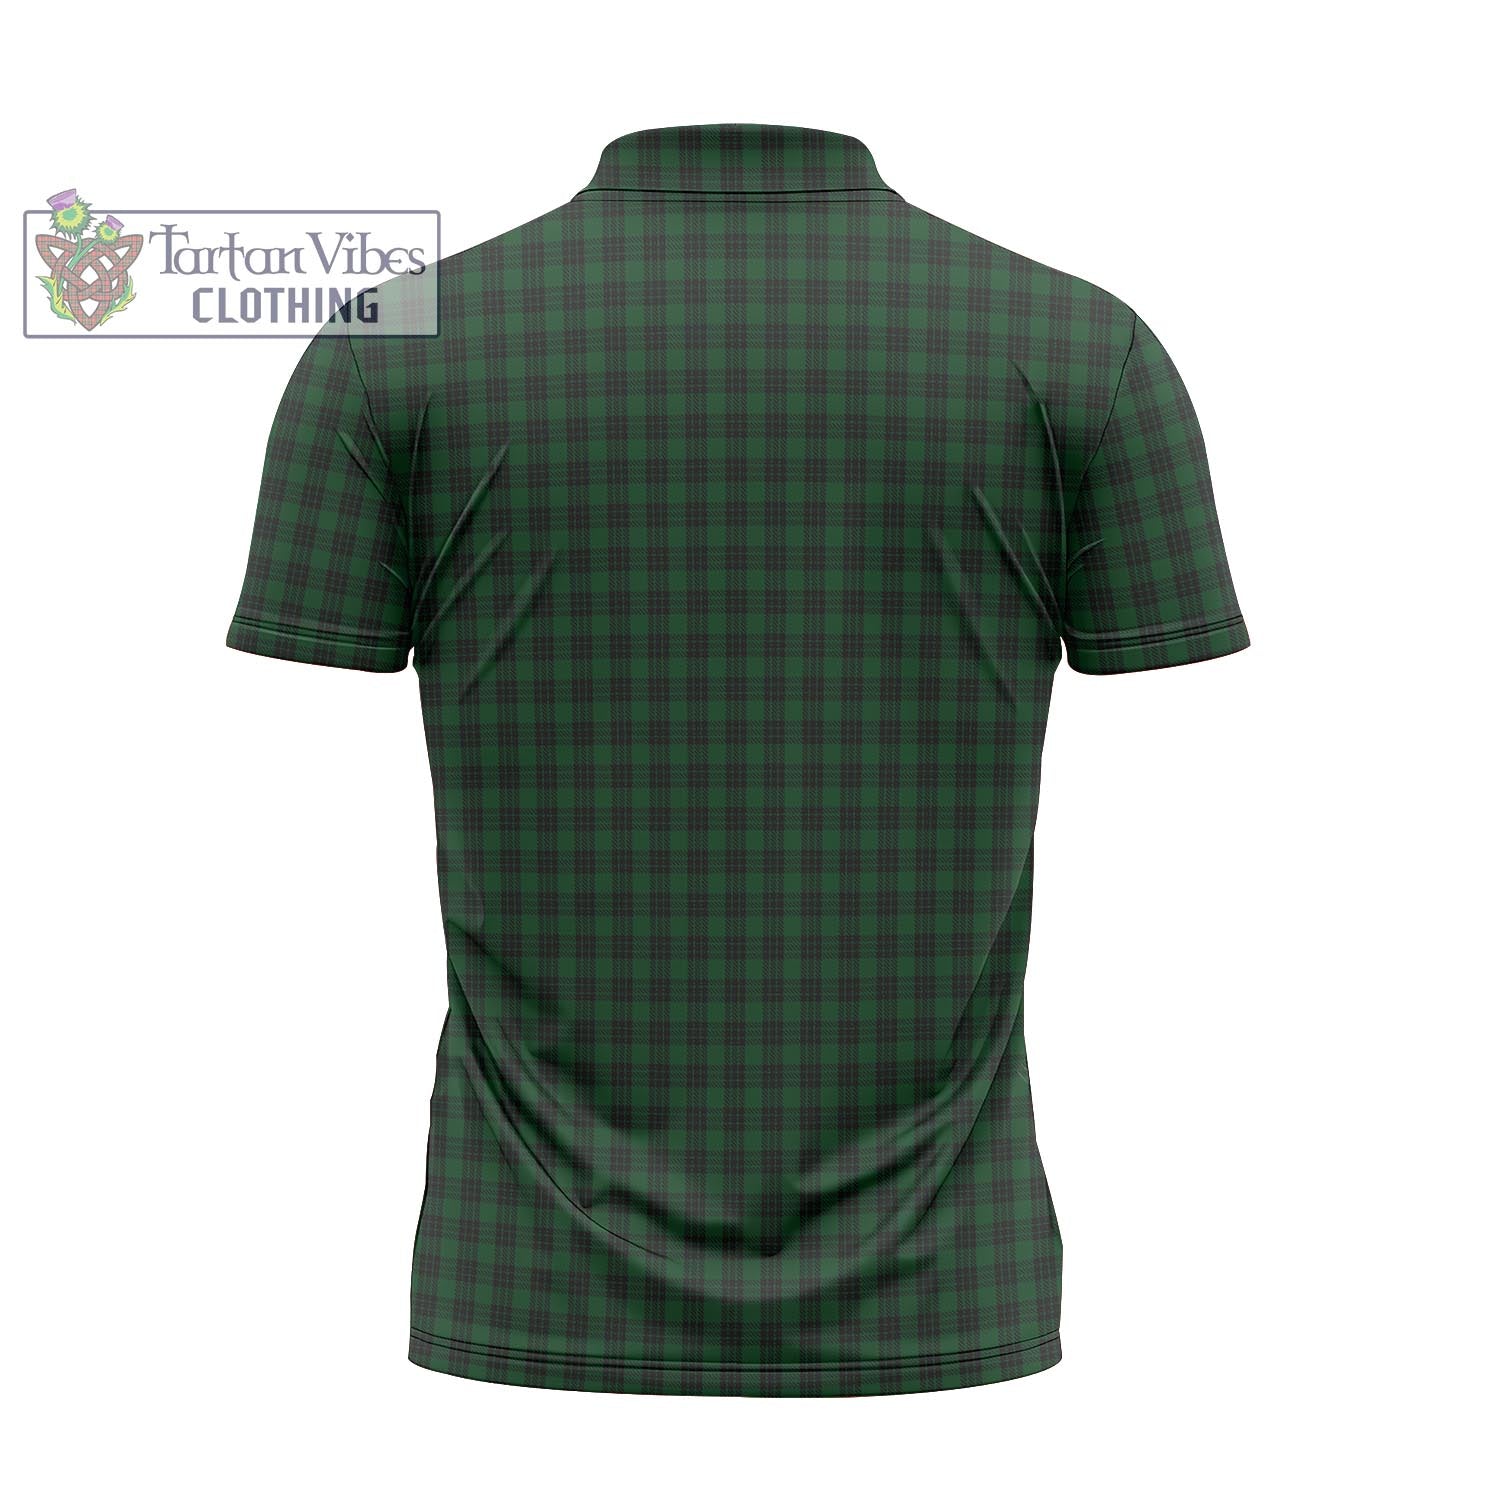 Tartan Vibes Clothing Graham Tartan Zipper Polo Shirt with Family Crest